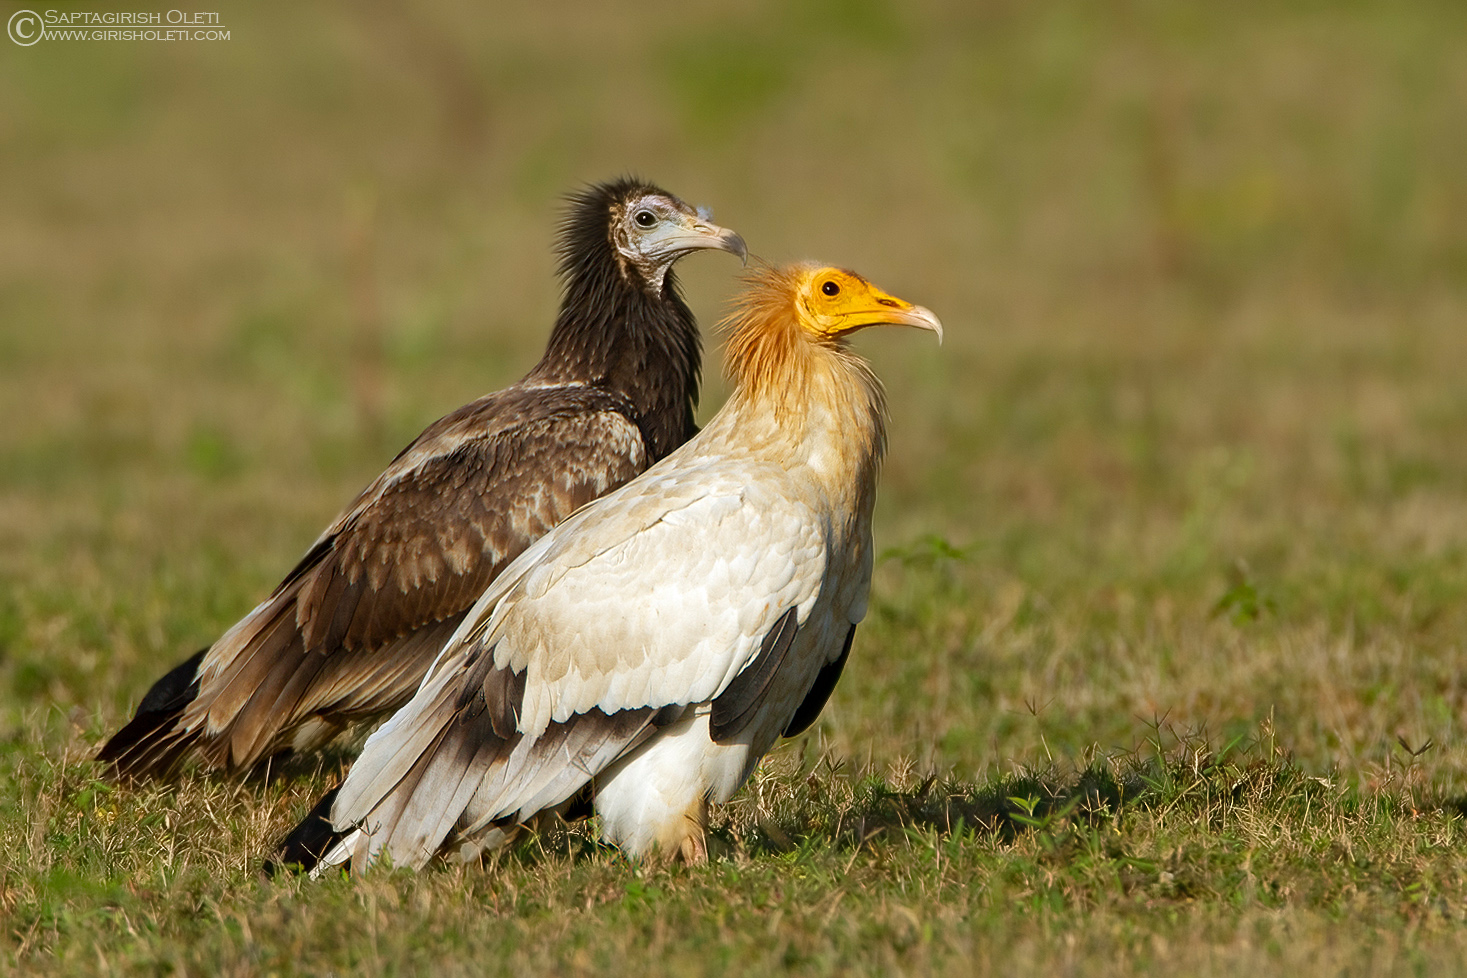 Egyptian Vulture photographed at Bangalore, India